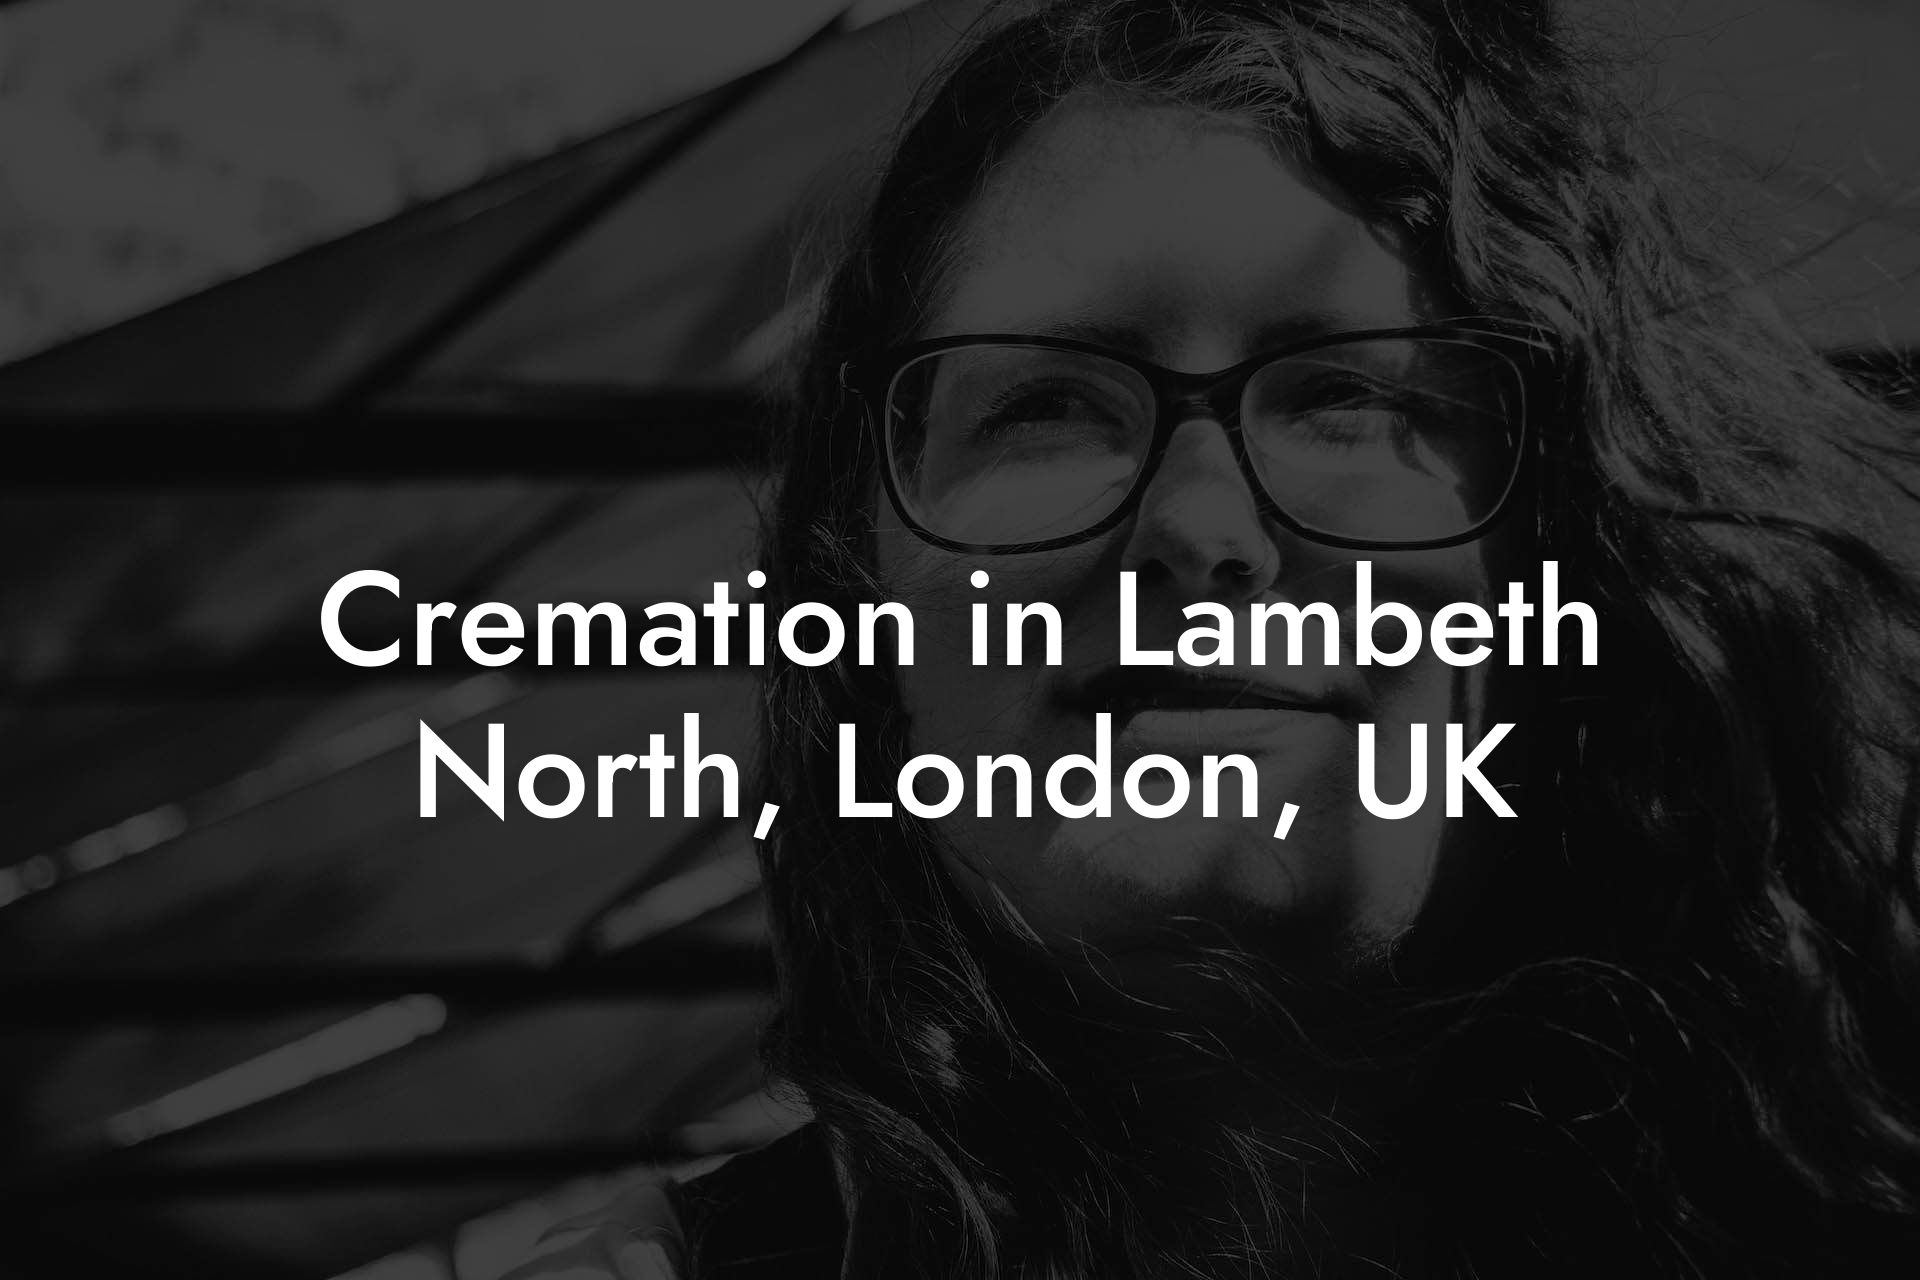 Cremation in Lambeth North, London, UK